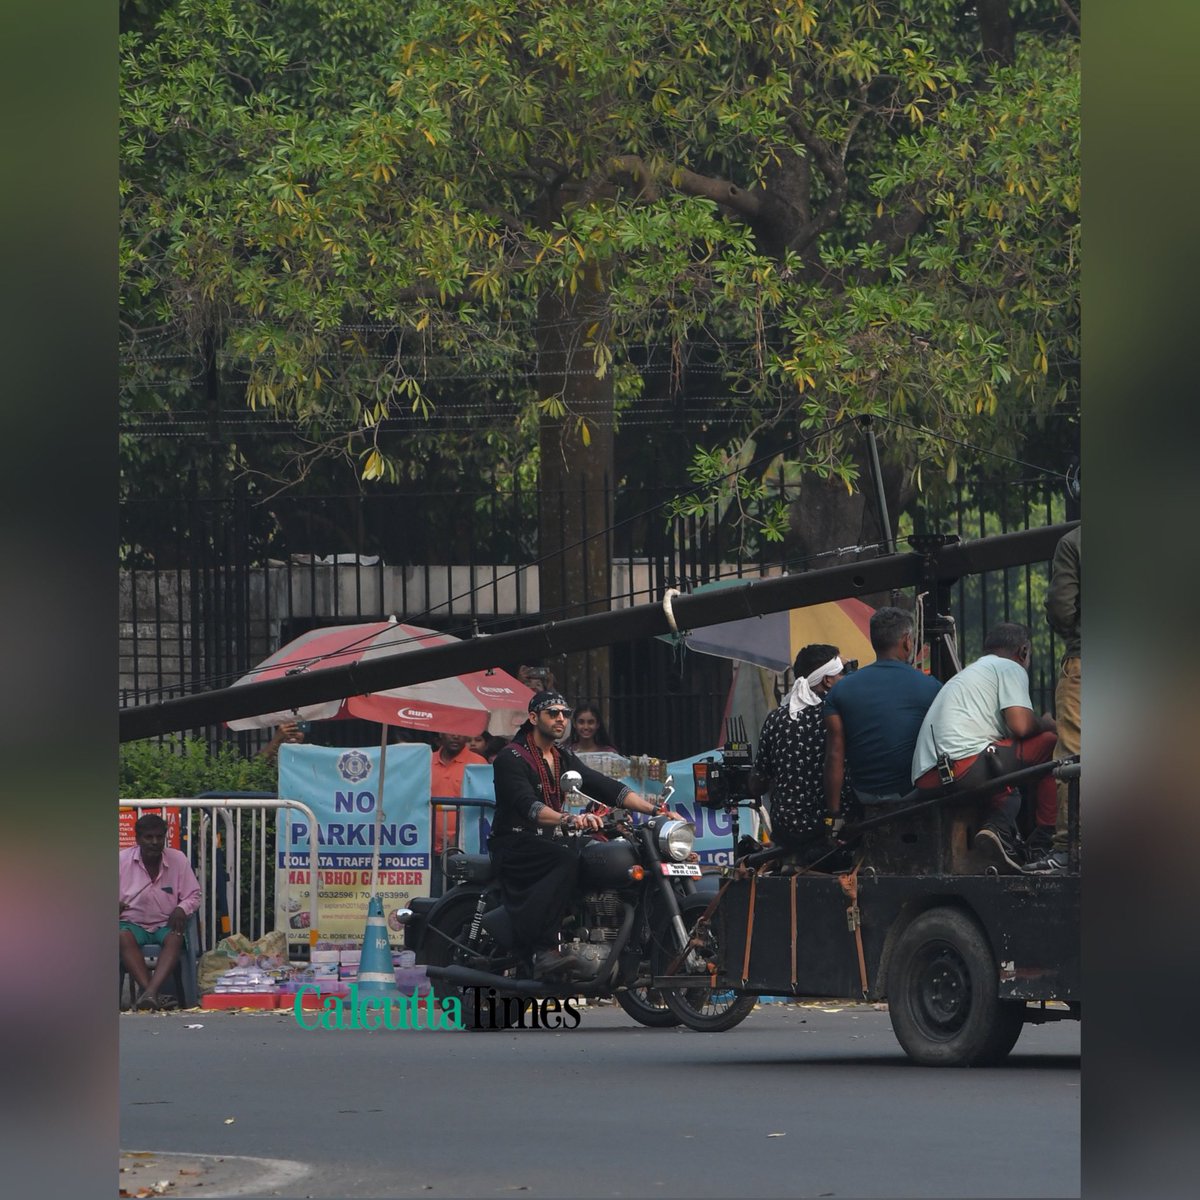 Kartik Aaryan was spotted in front of Victoria Memorial shooting for Bhool Bhulaiyaa 3. Glimpses 

#kartikaaryan #victoriamemorial #kolkata #bhoolbhulaiyaa3 #bhoolbhulaiyaa #shooting #onset #bollywood #actor #celebrity